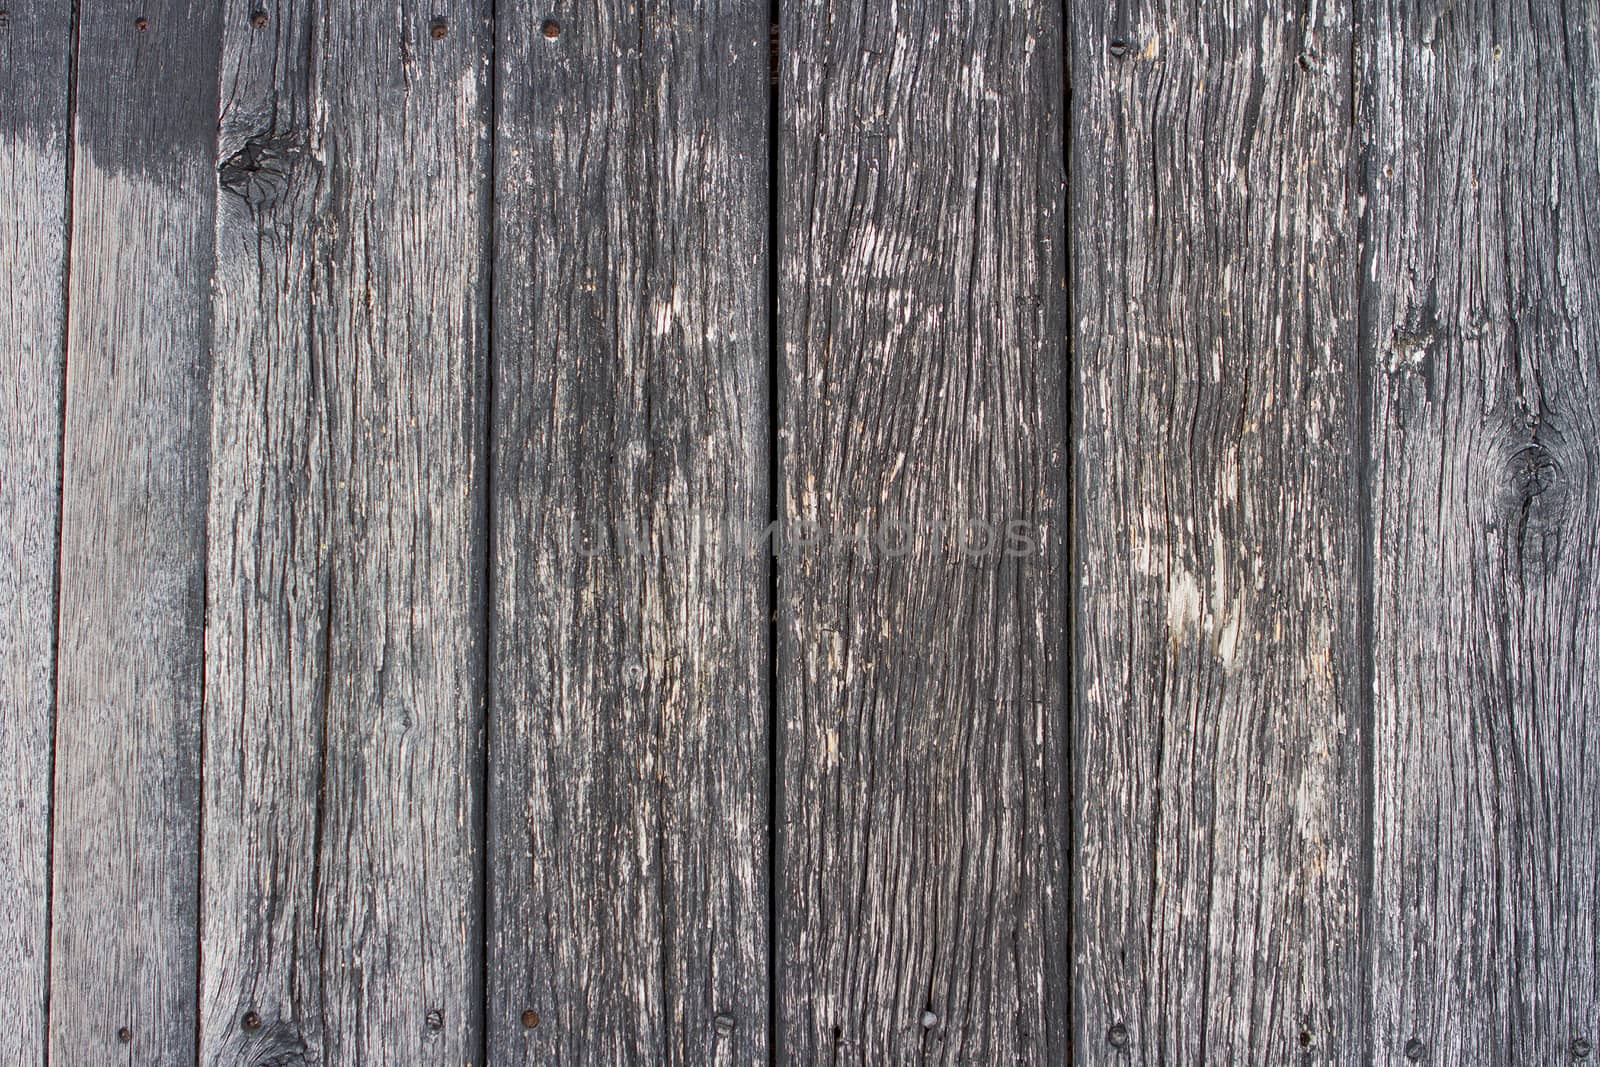 Old wood texture black have tack of old by TakerWalker